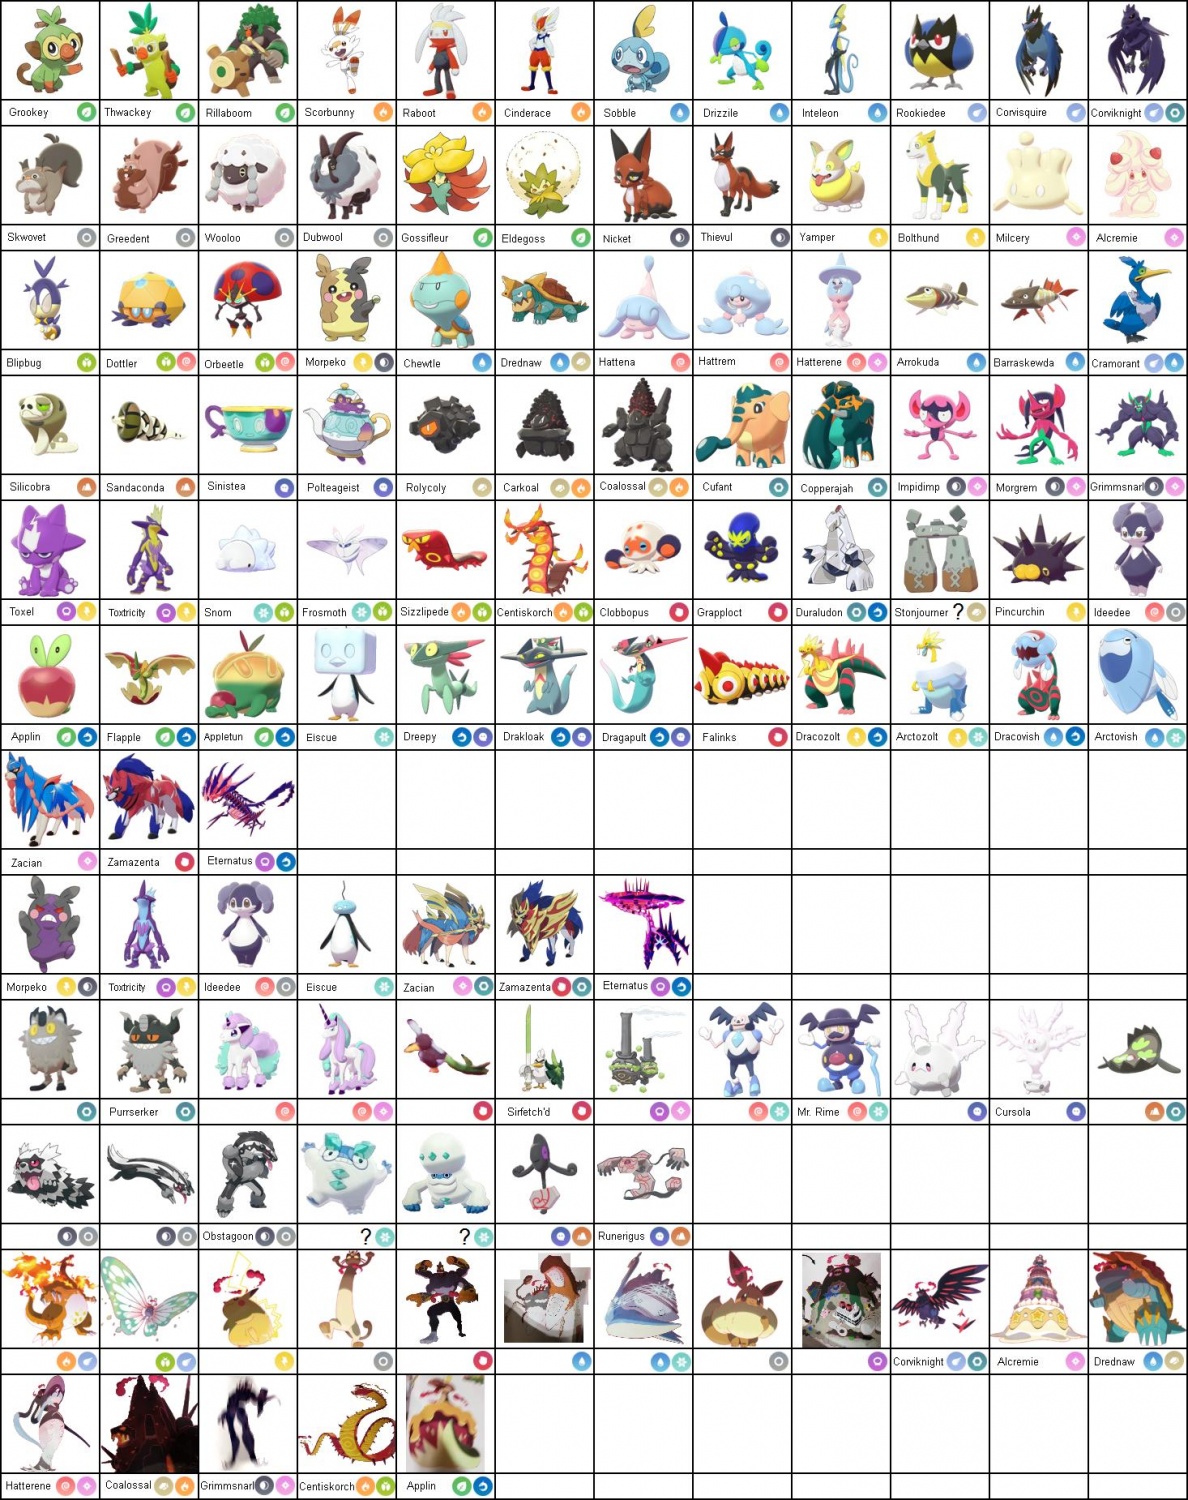 Only 12 pokemon missing for full Pokedex, help? : r/PokemonHome